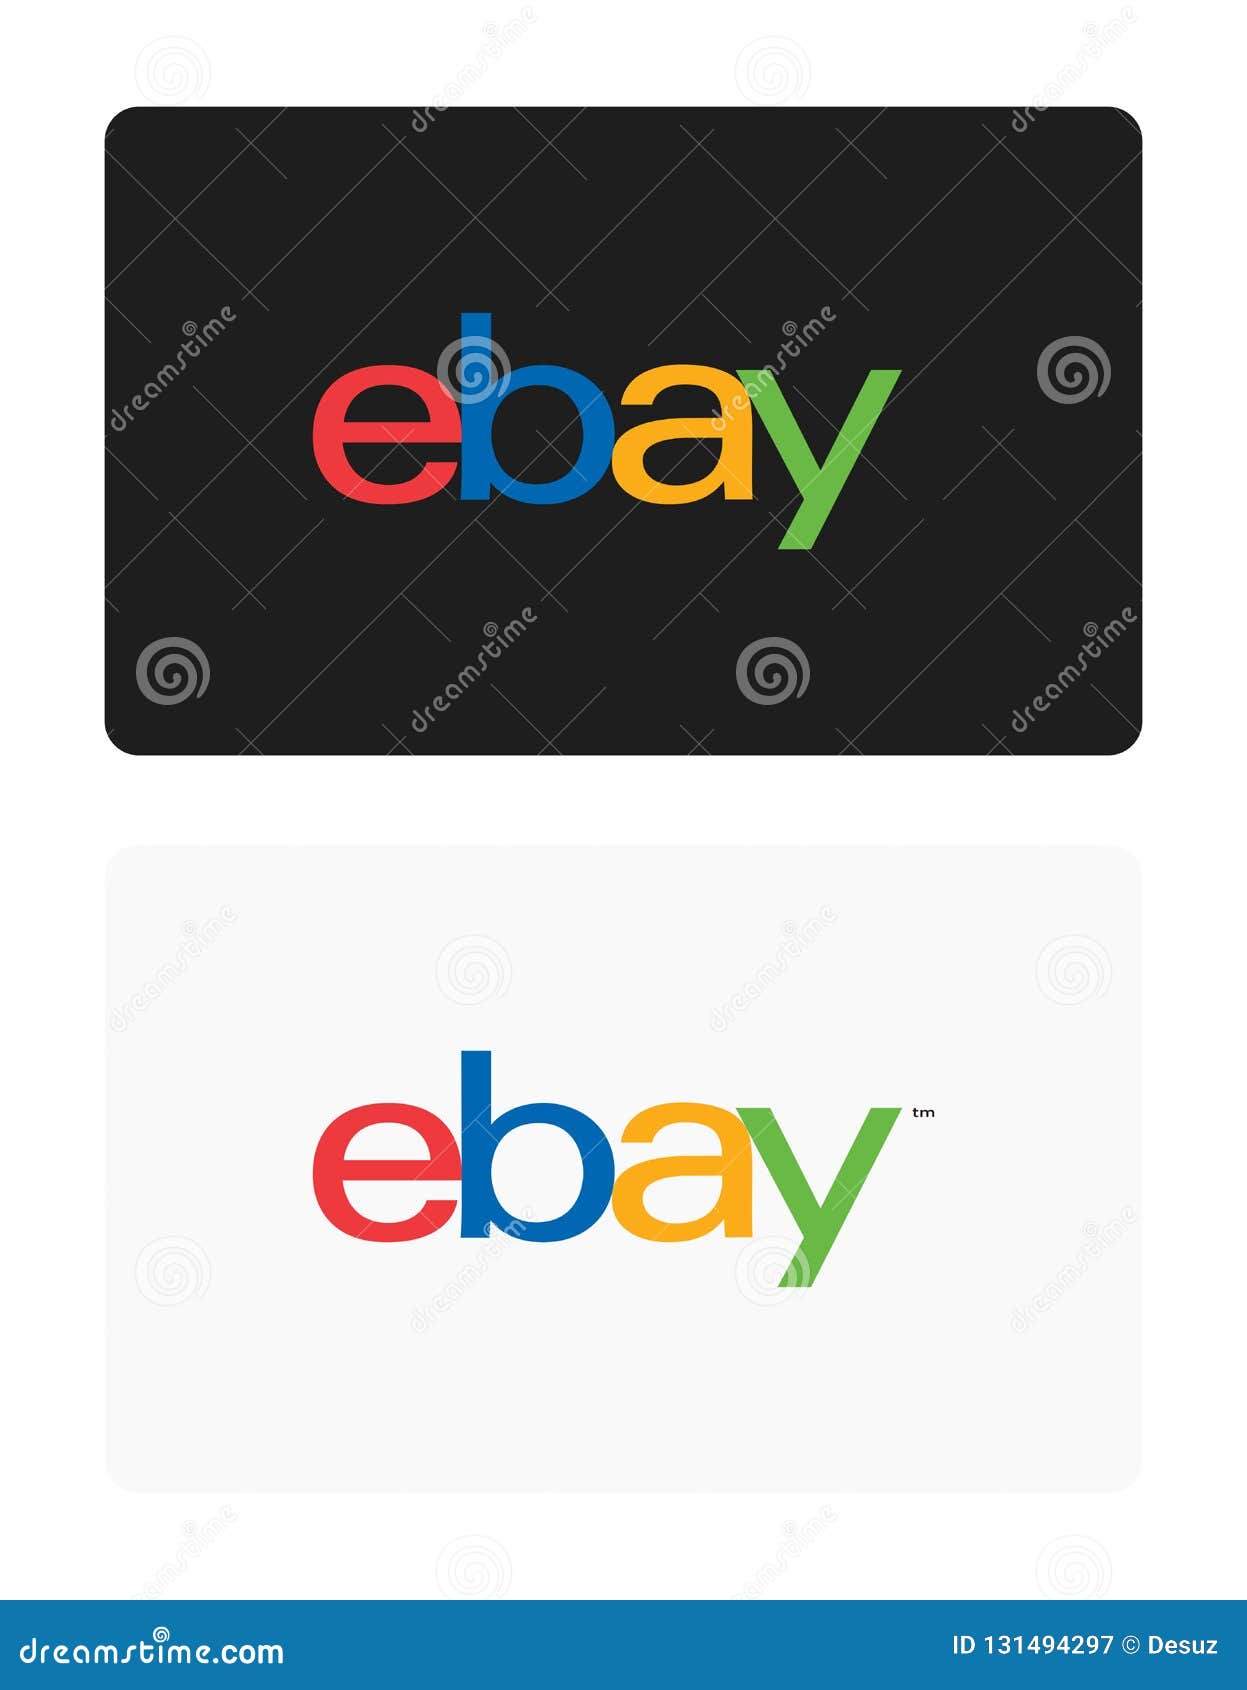 ebay new logo png